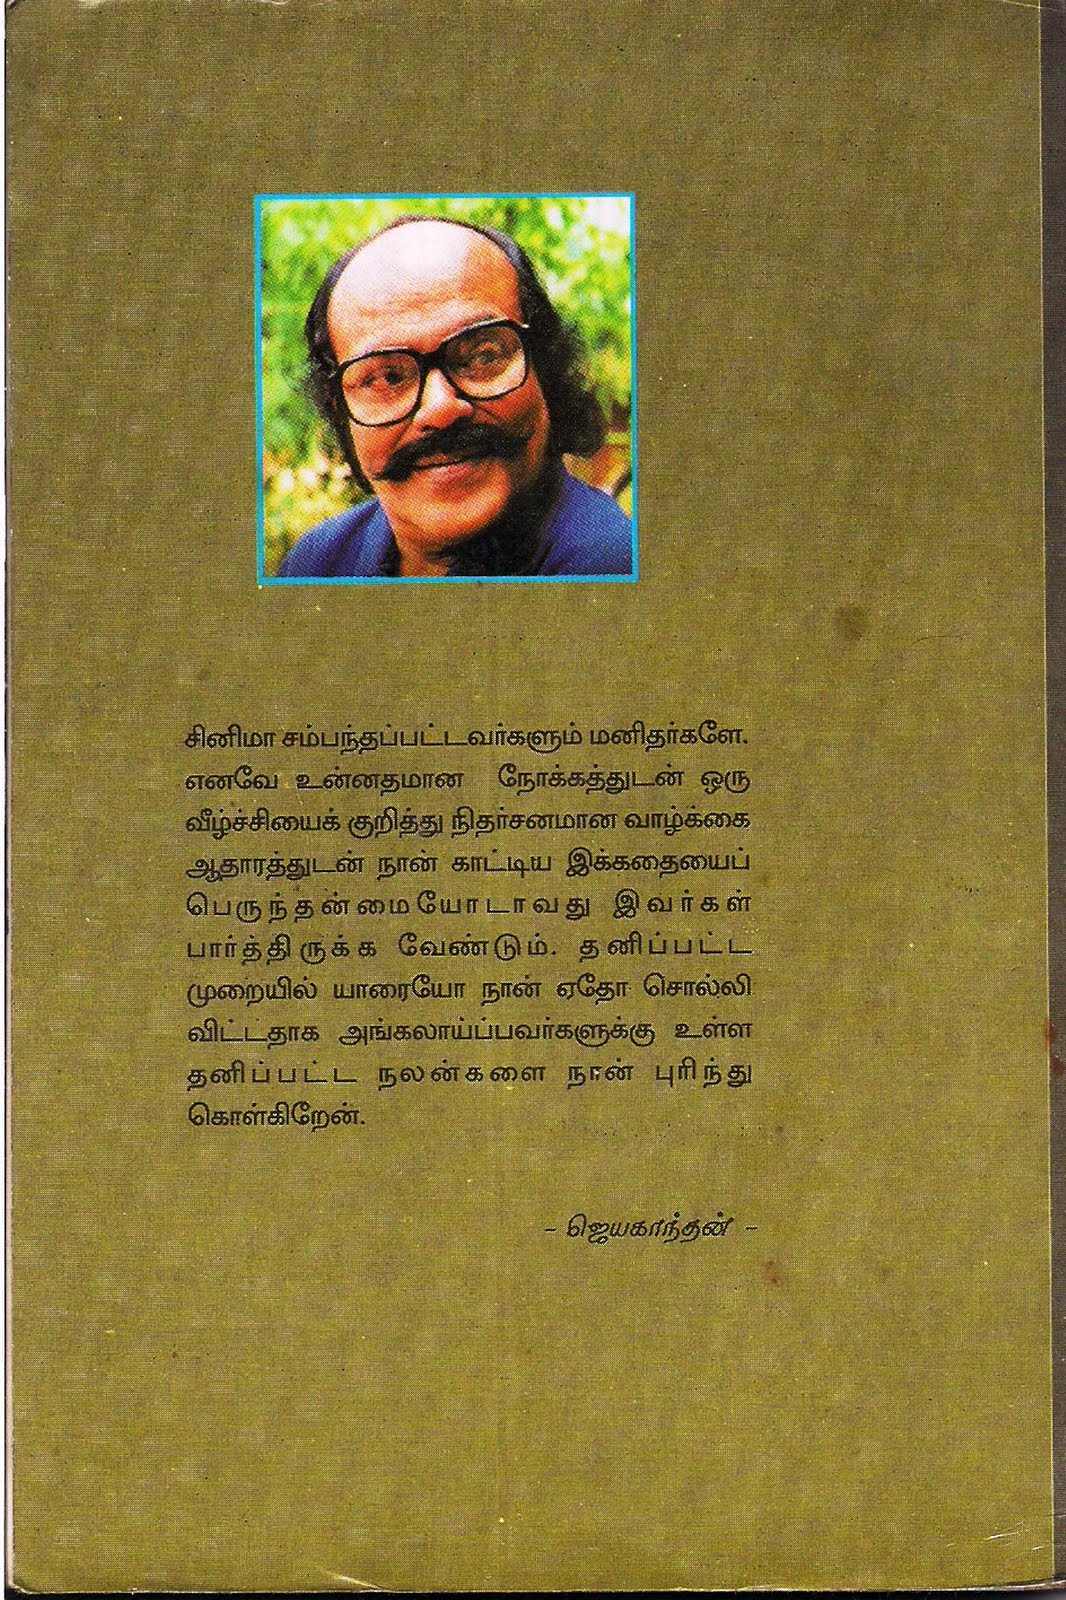 Jeyakanthan's Cinimavukku Pona Sithalu [சினிமாவுக்கு போன சித்தாளு] Book Review By Karthik Kirupakaran. Book Day, Bharathi Puthakalayam